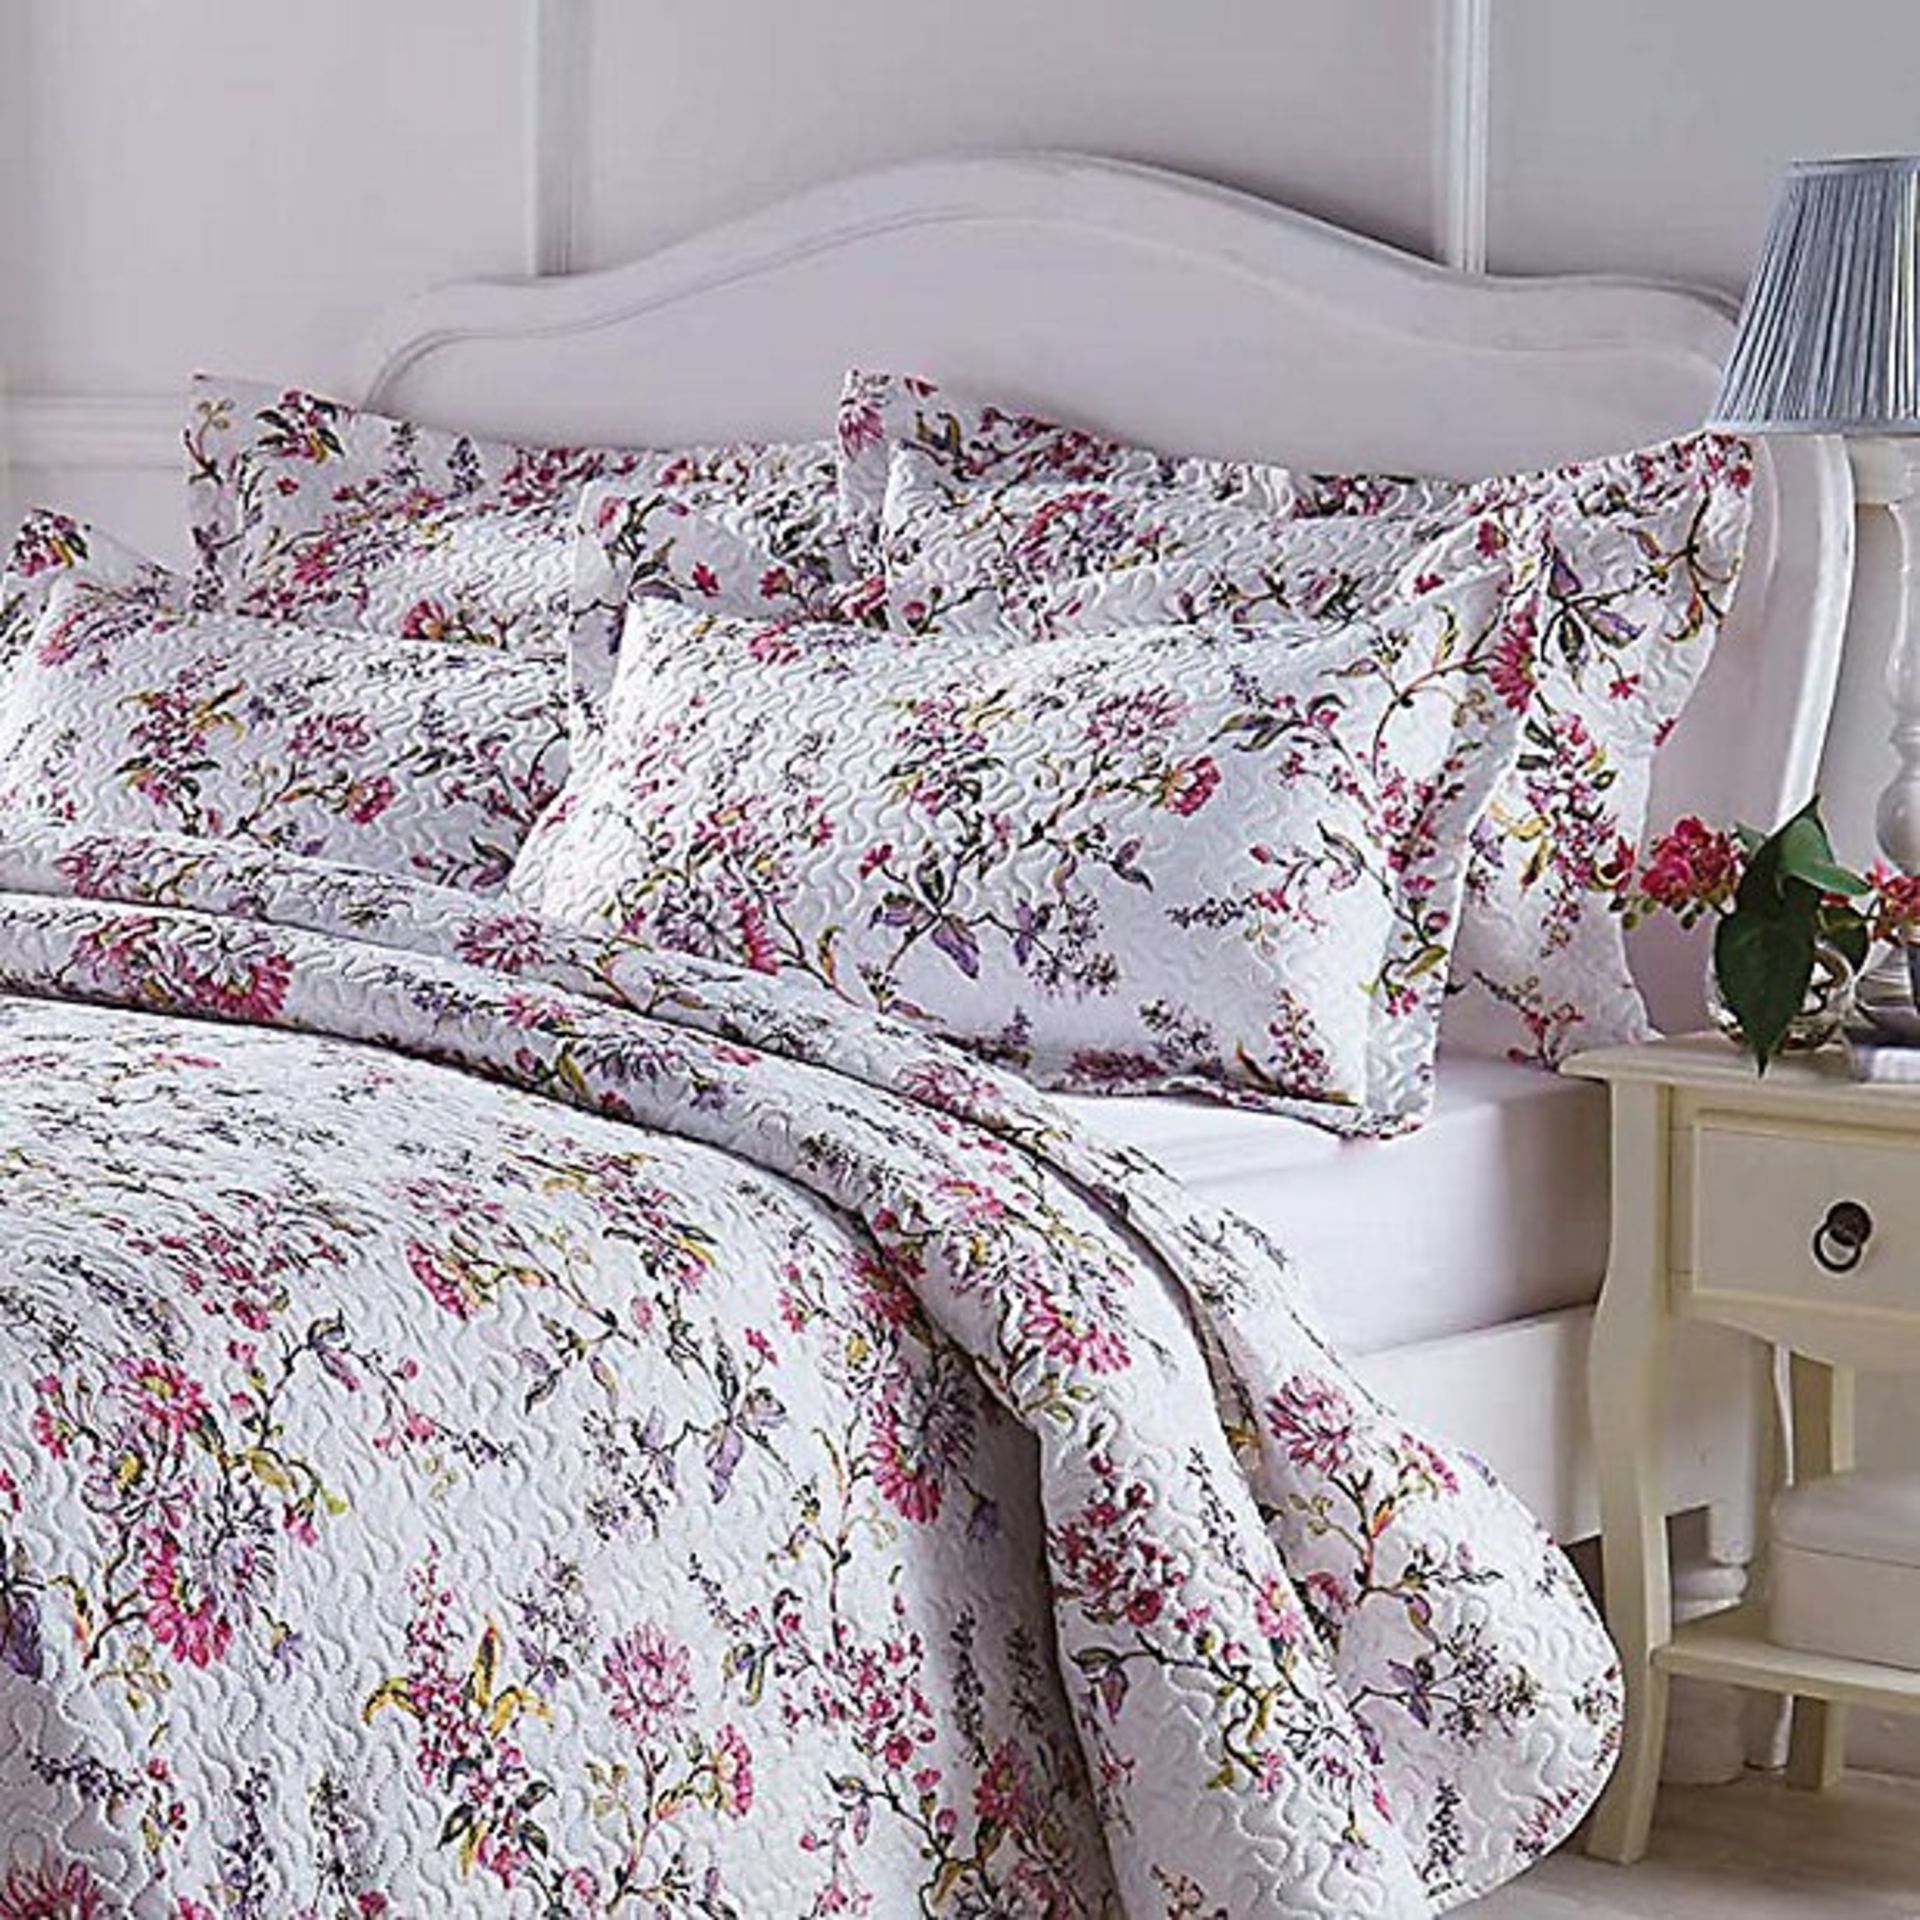 Flower Garden Quilted Bedspread Size Single - Pink and Lilac Floral Design - ER45